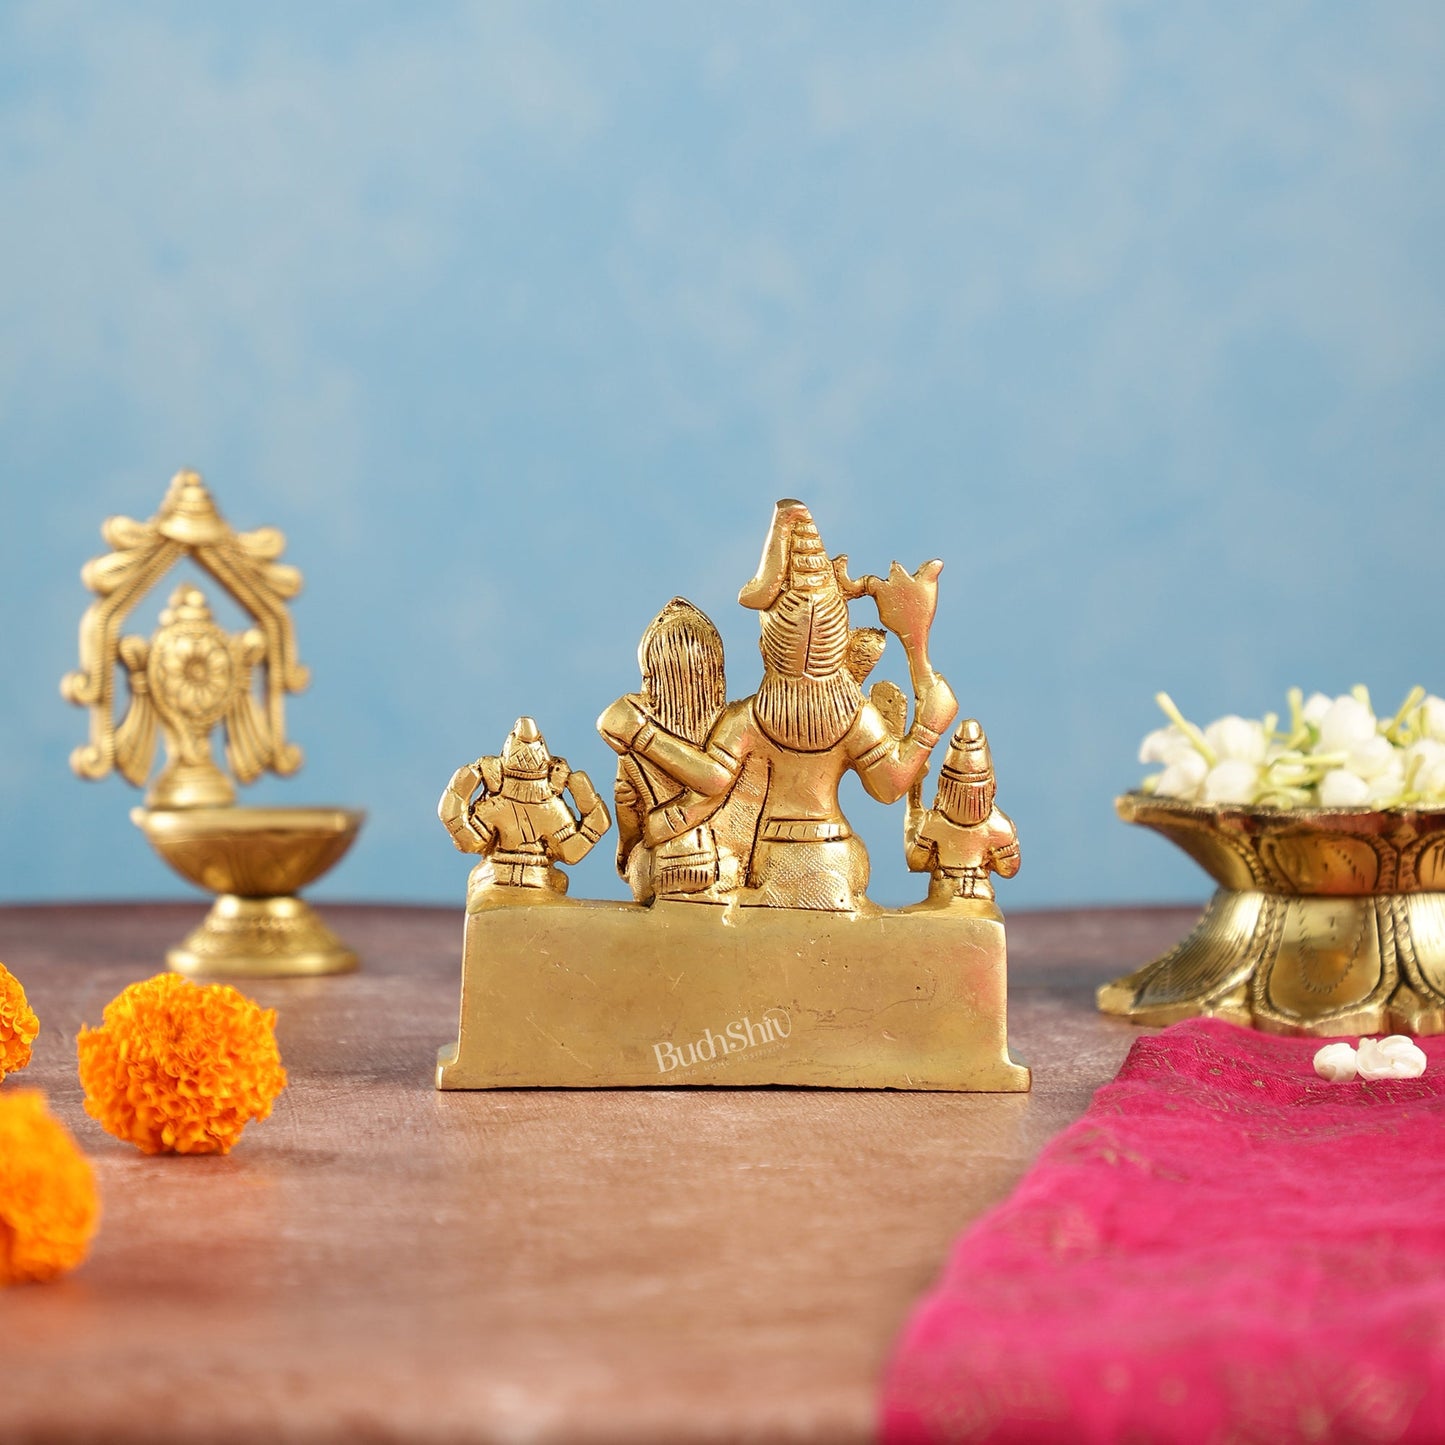 Divine Brass Shiv Parivar Statue 4" - Budhshiv.com